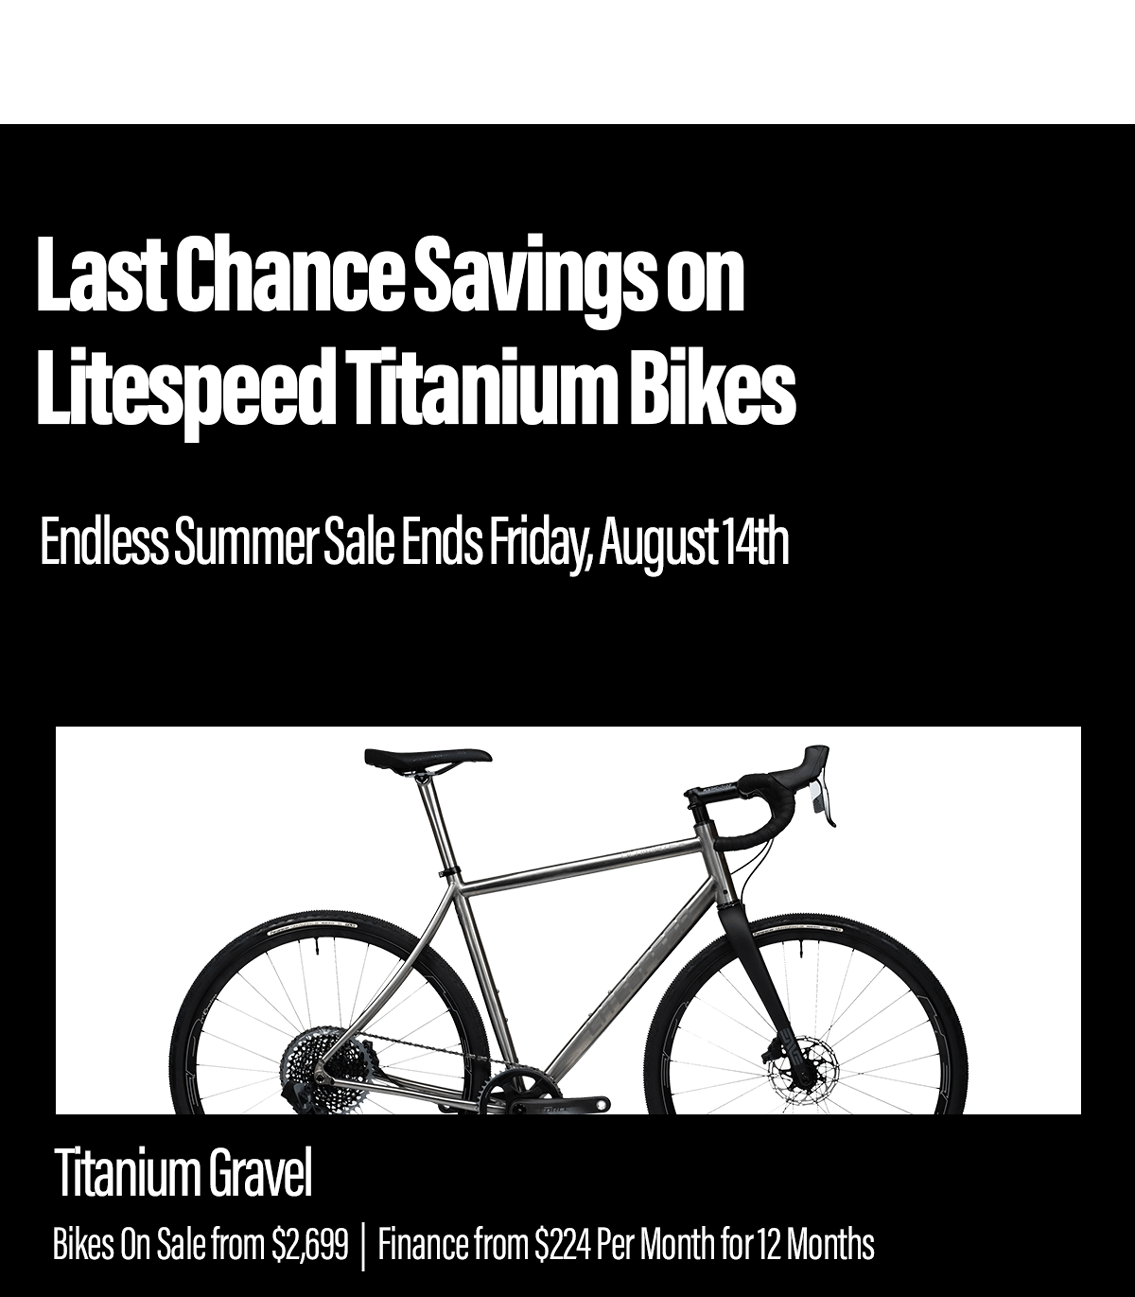 Last chance savings on titanium bikes: sale ends August 14th! Shop titanium gravel bikes from $2,699